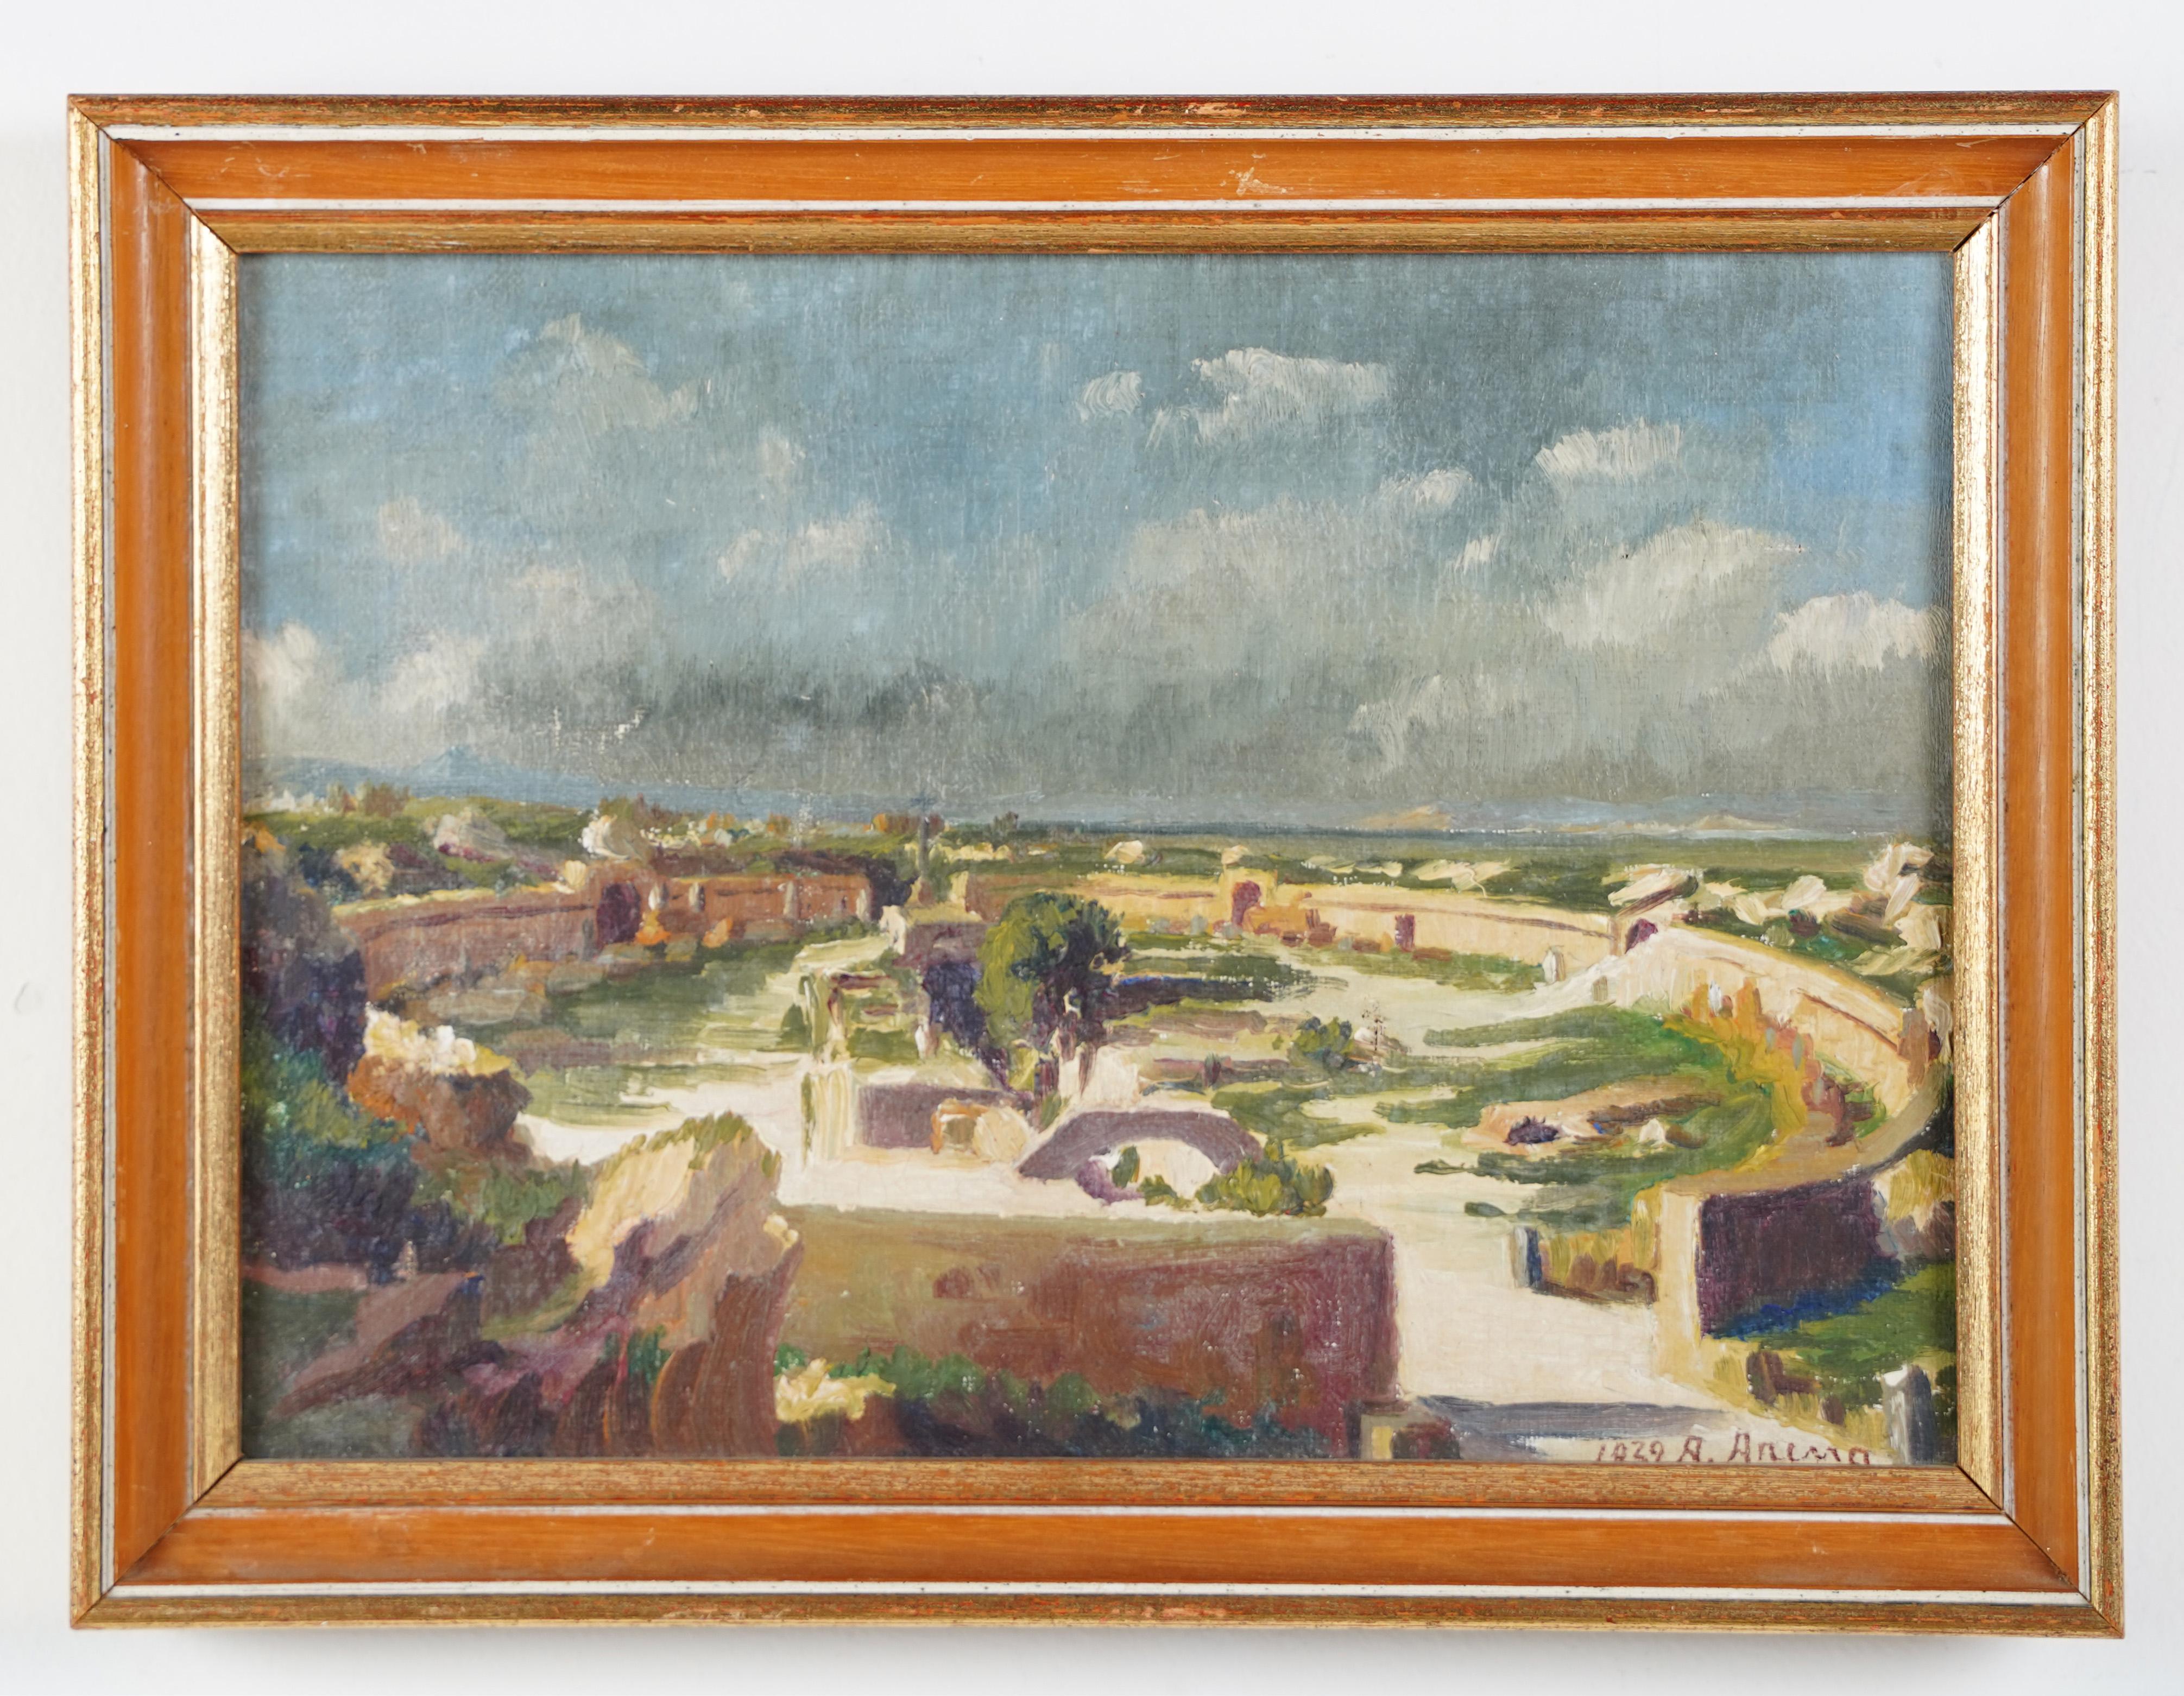 Antique impressionist signed landscape oil painting.  Oil on canvas.  Signed illegibly.  Framed.  Image size, 13L x 9.5H.